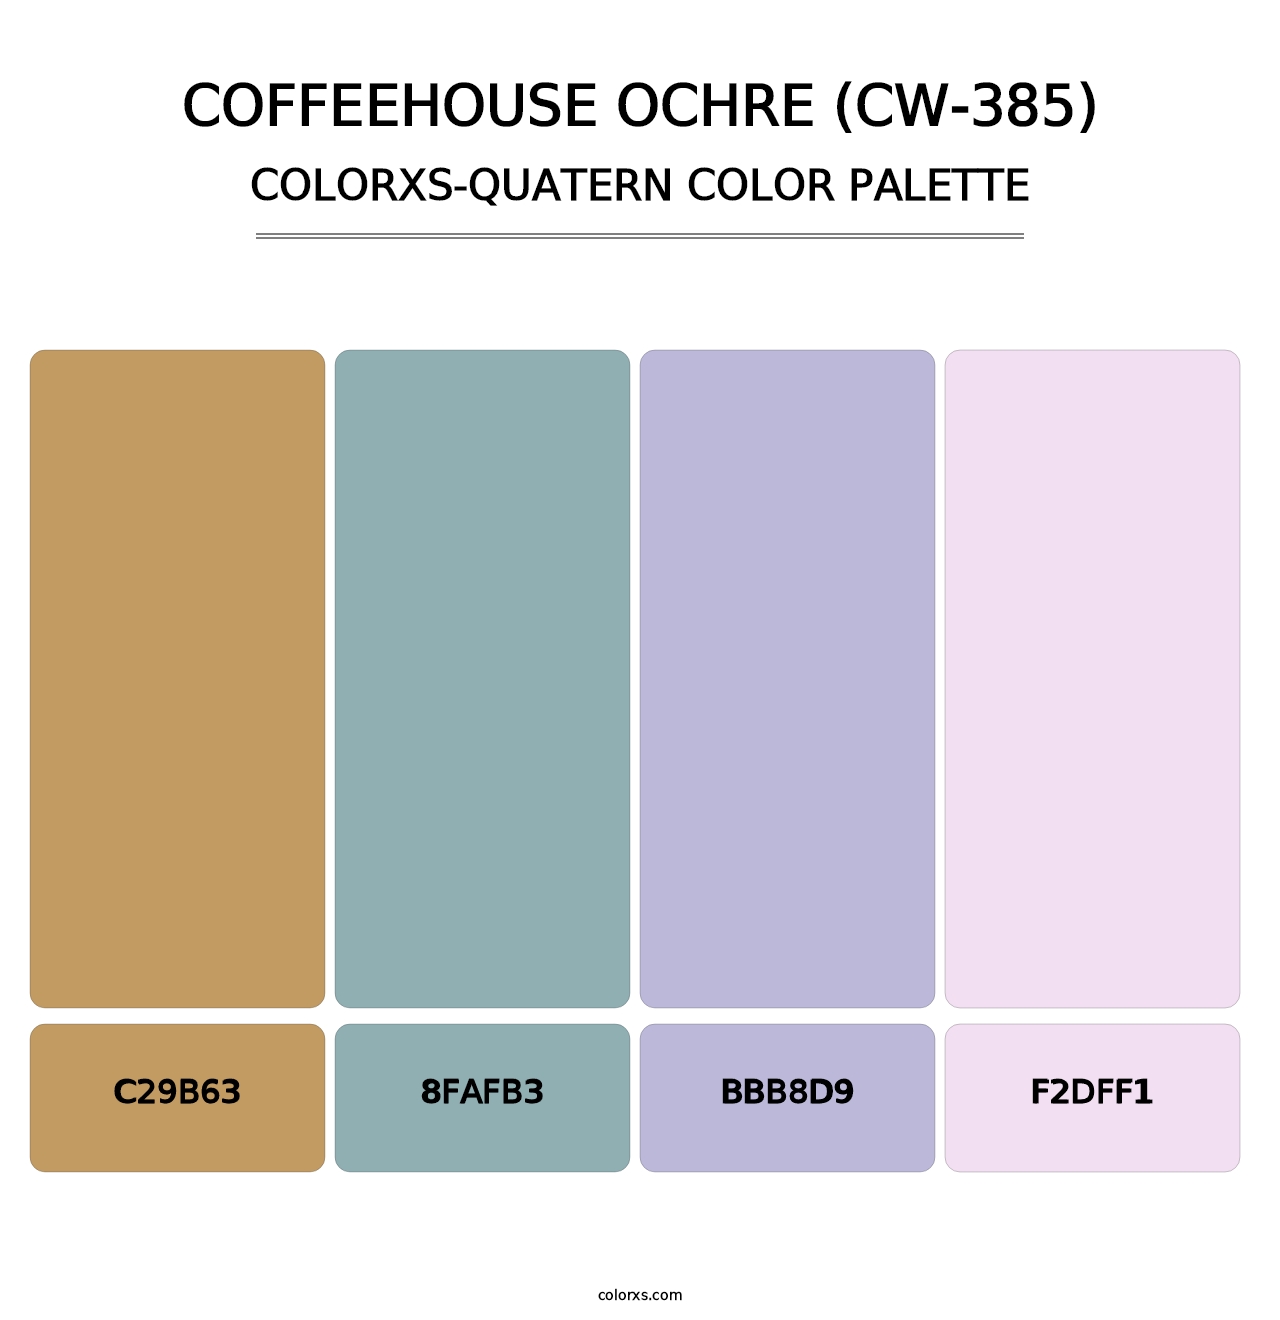 Coffeehouse Ochre (CW-385) - Colorxs Quatern Palette